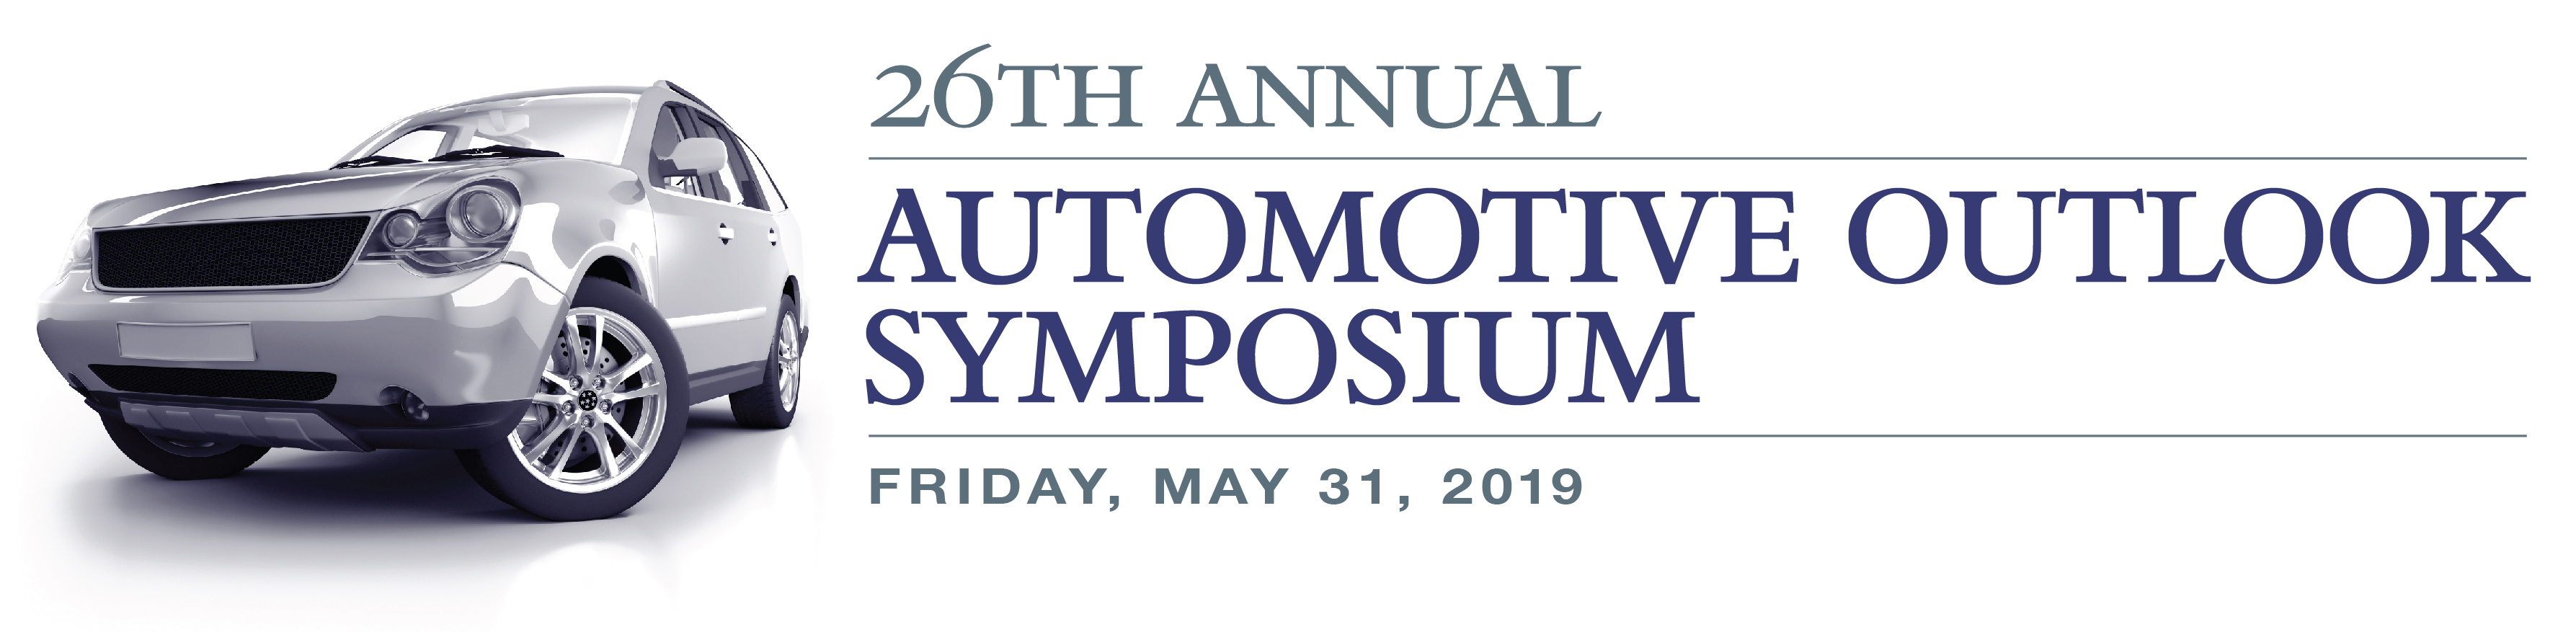 26th Annual Automotive Outlook Symposium logo. 